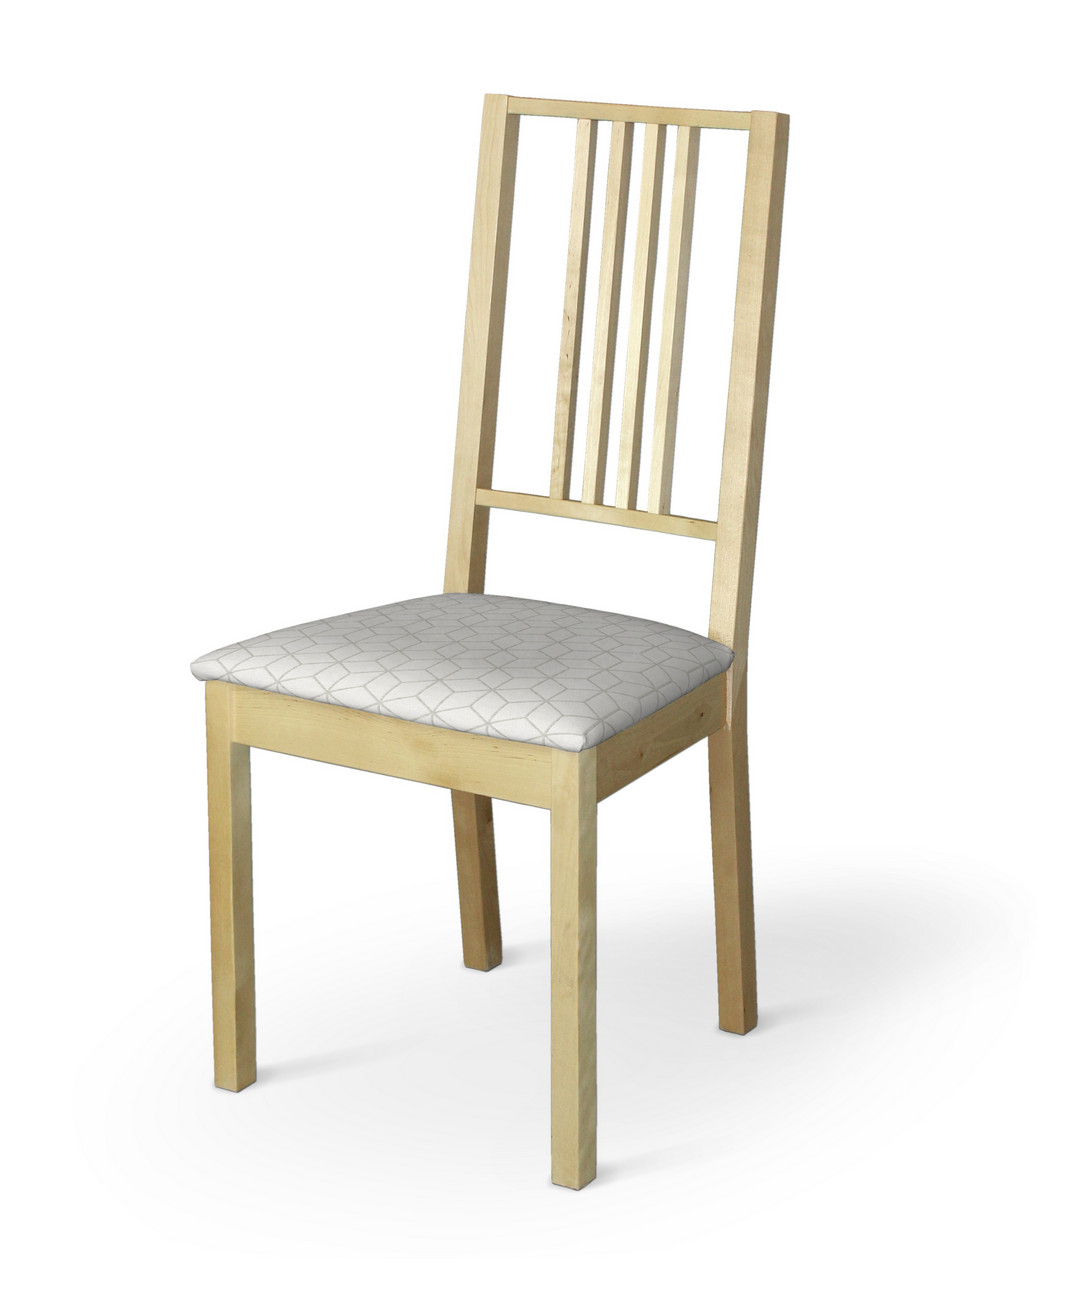 Dekoria Potah na sedák židle Börje, vzor na krémově bílém podkladu, potah sedák židle Börje, Sunny, 143-51